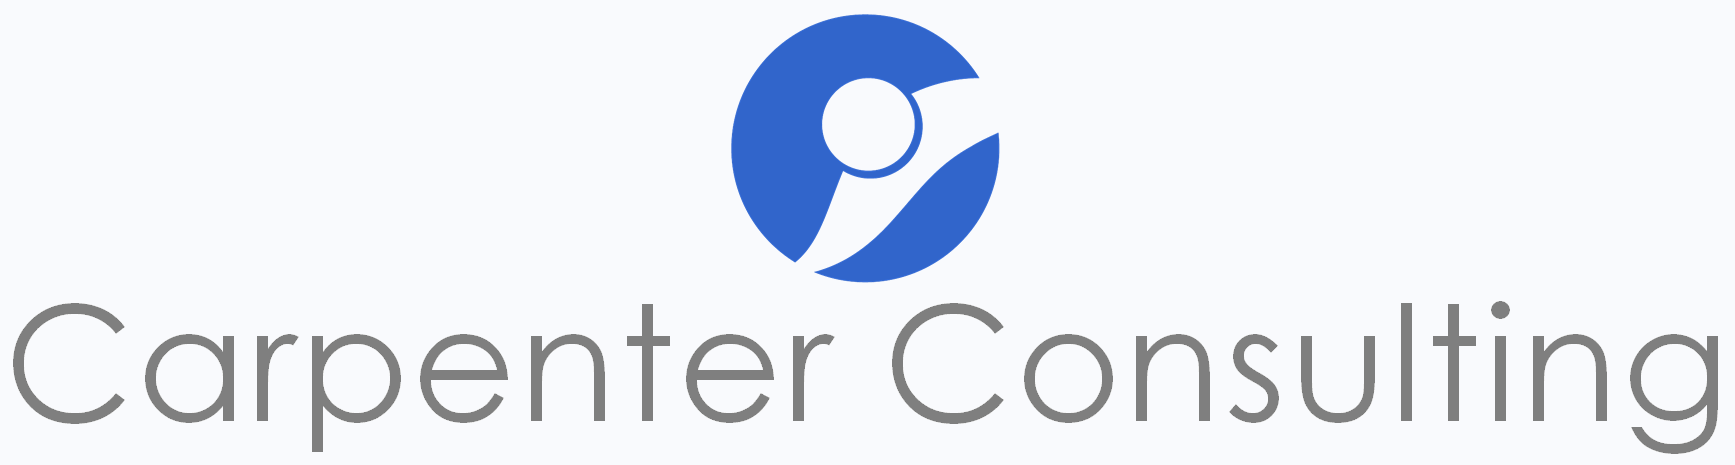 Carpenter Consulting Stefan Zimmermann Unternehmensberatung Logo